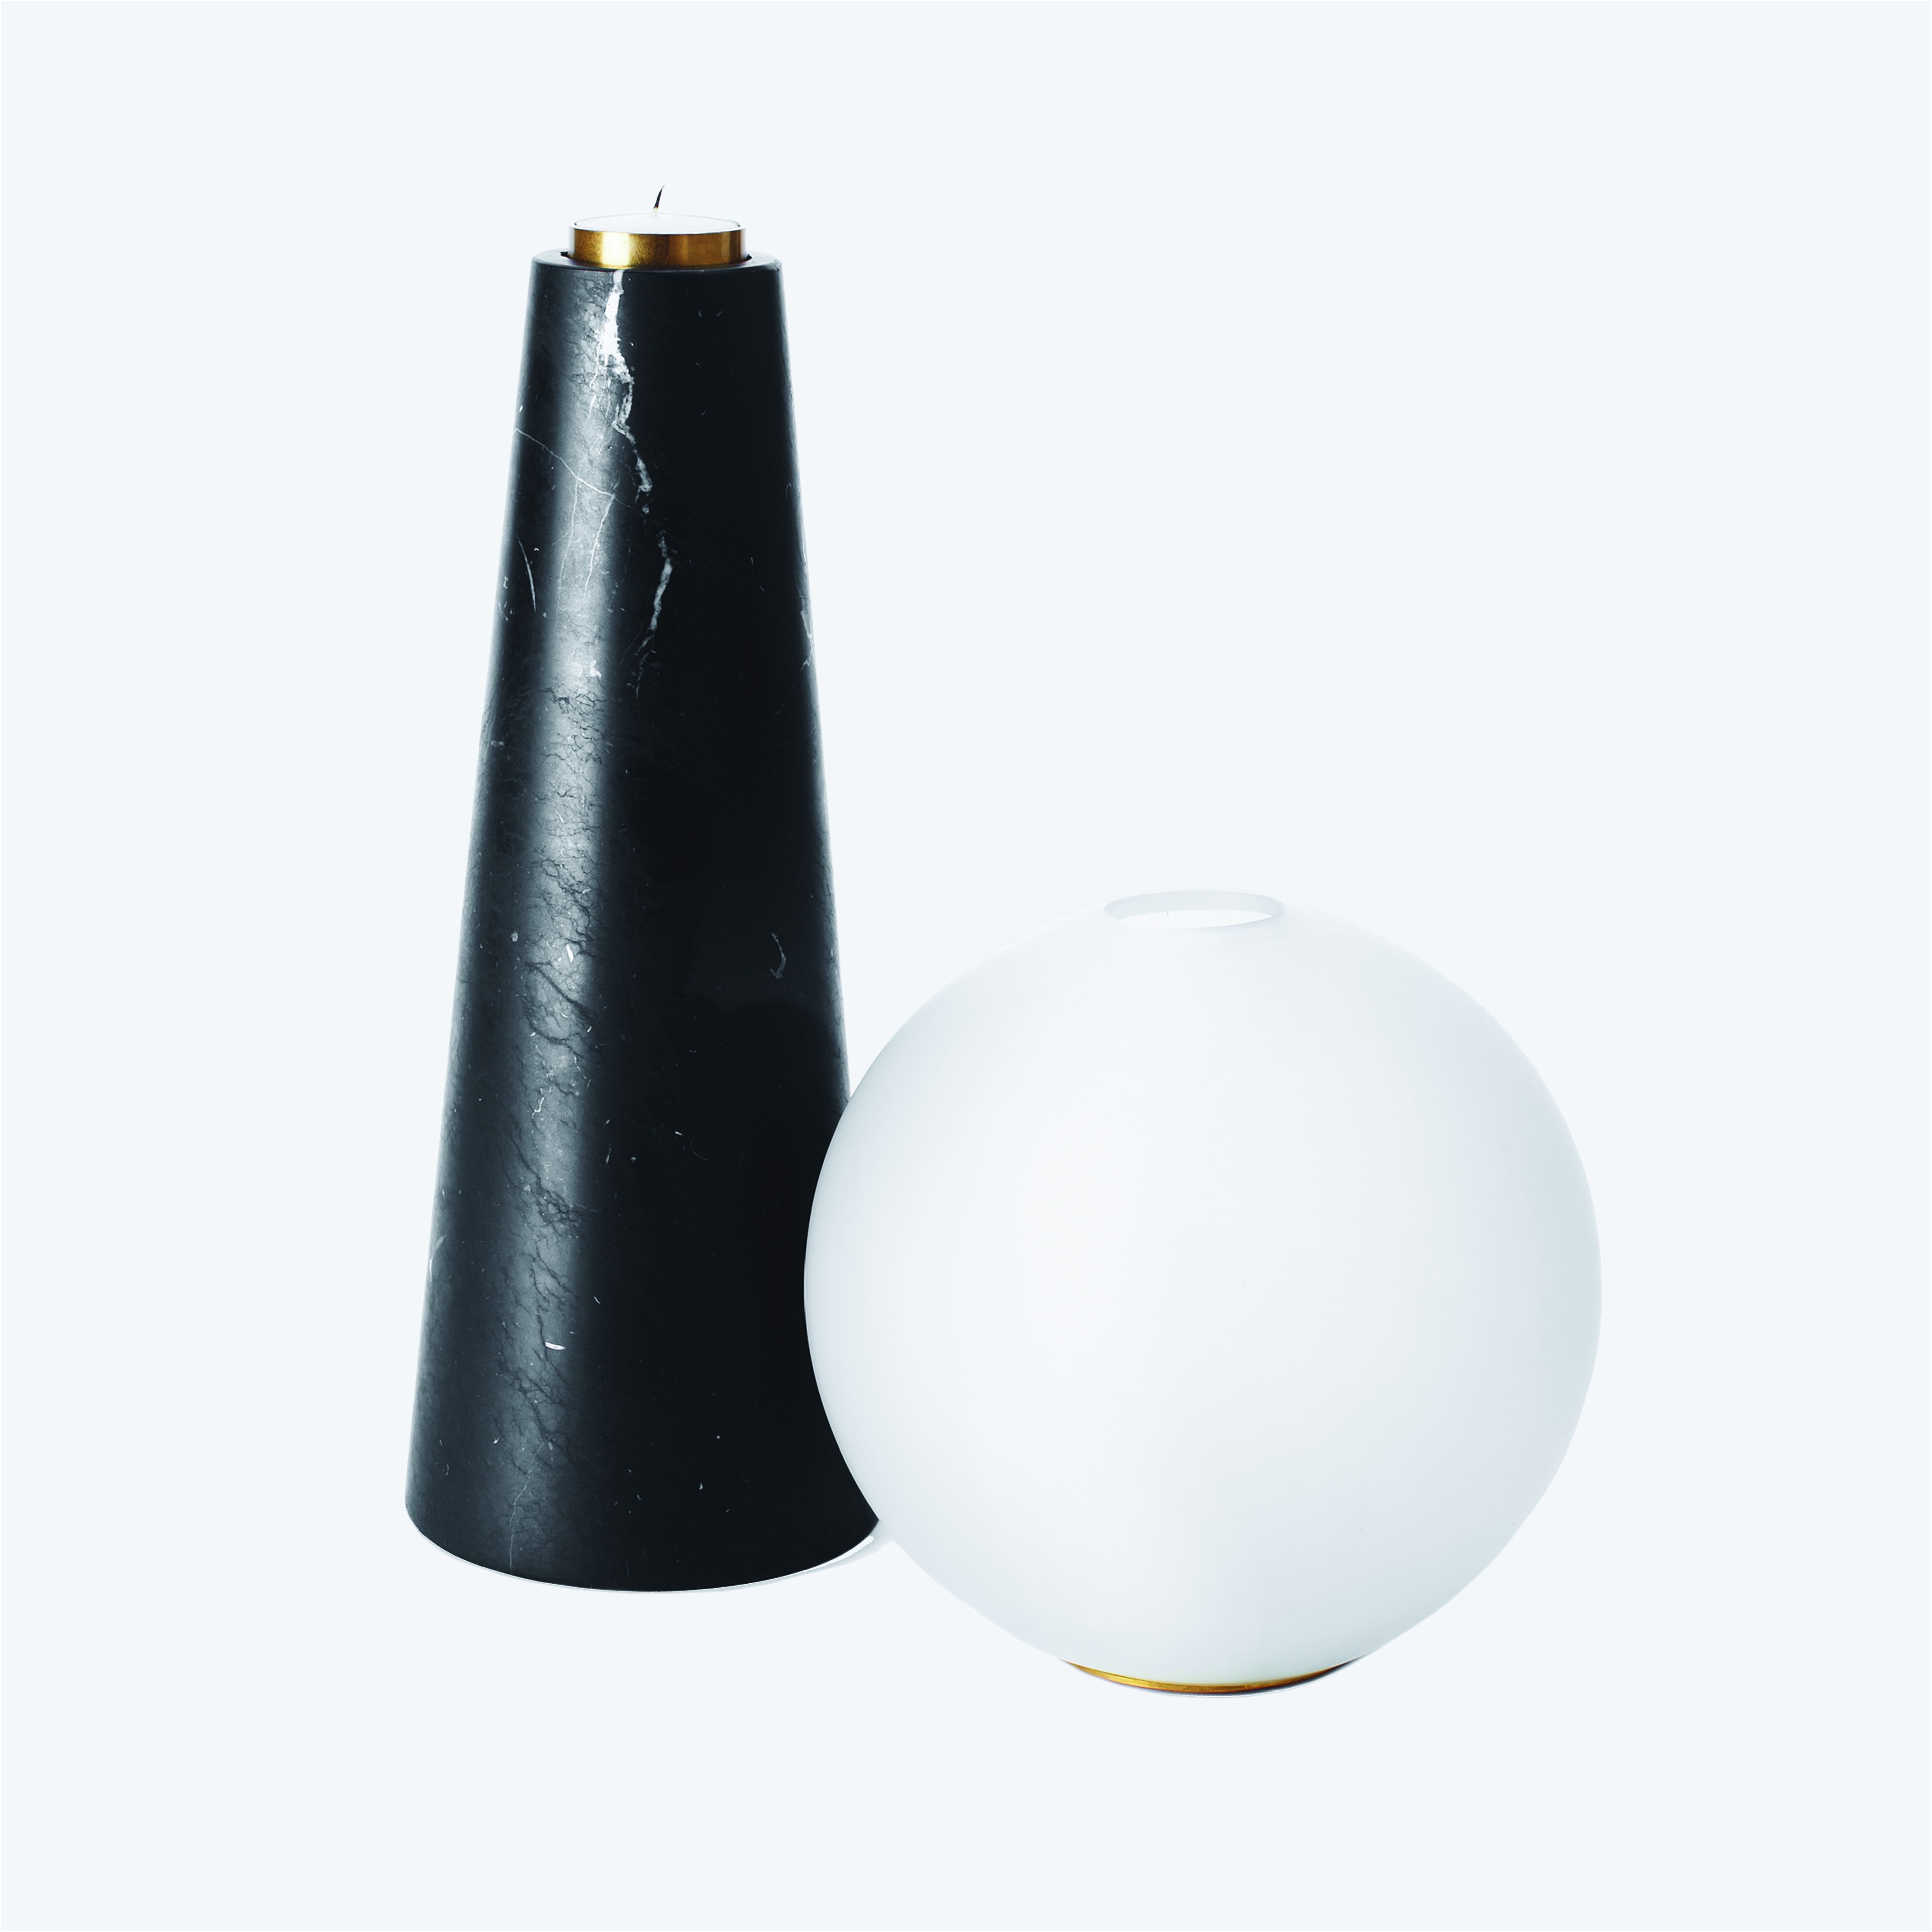 a black and white vase next to a white ball